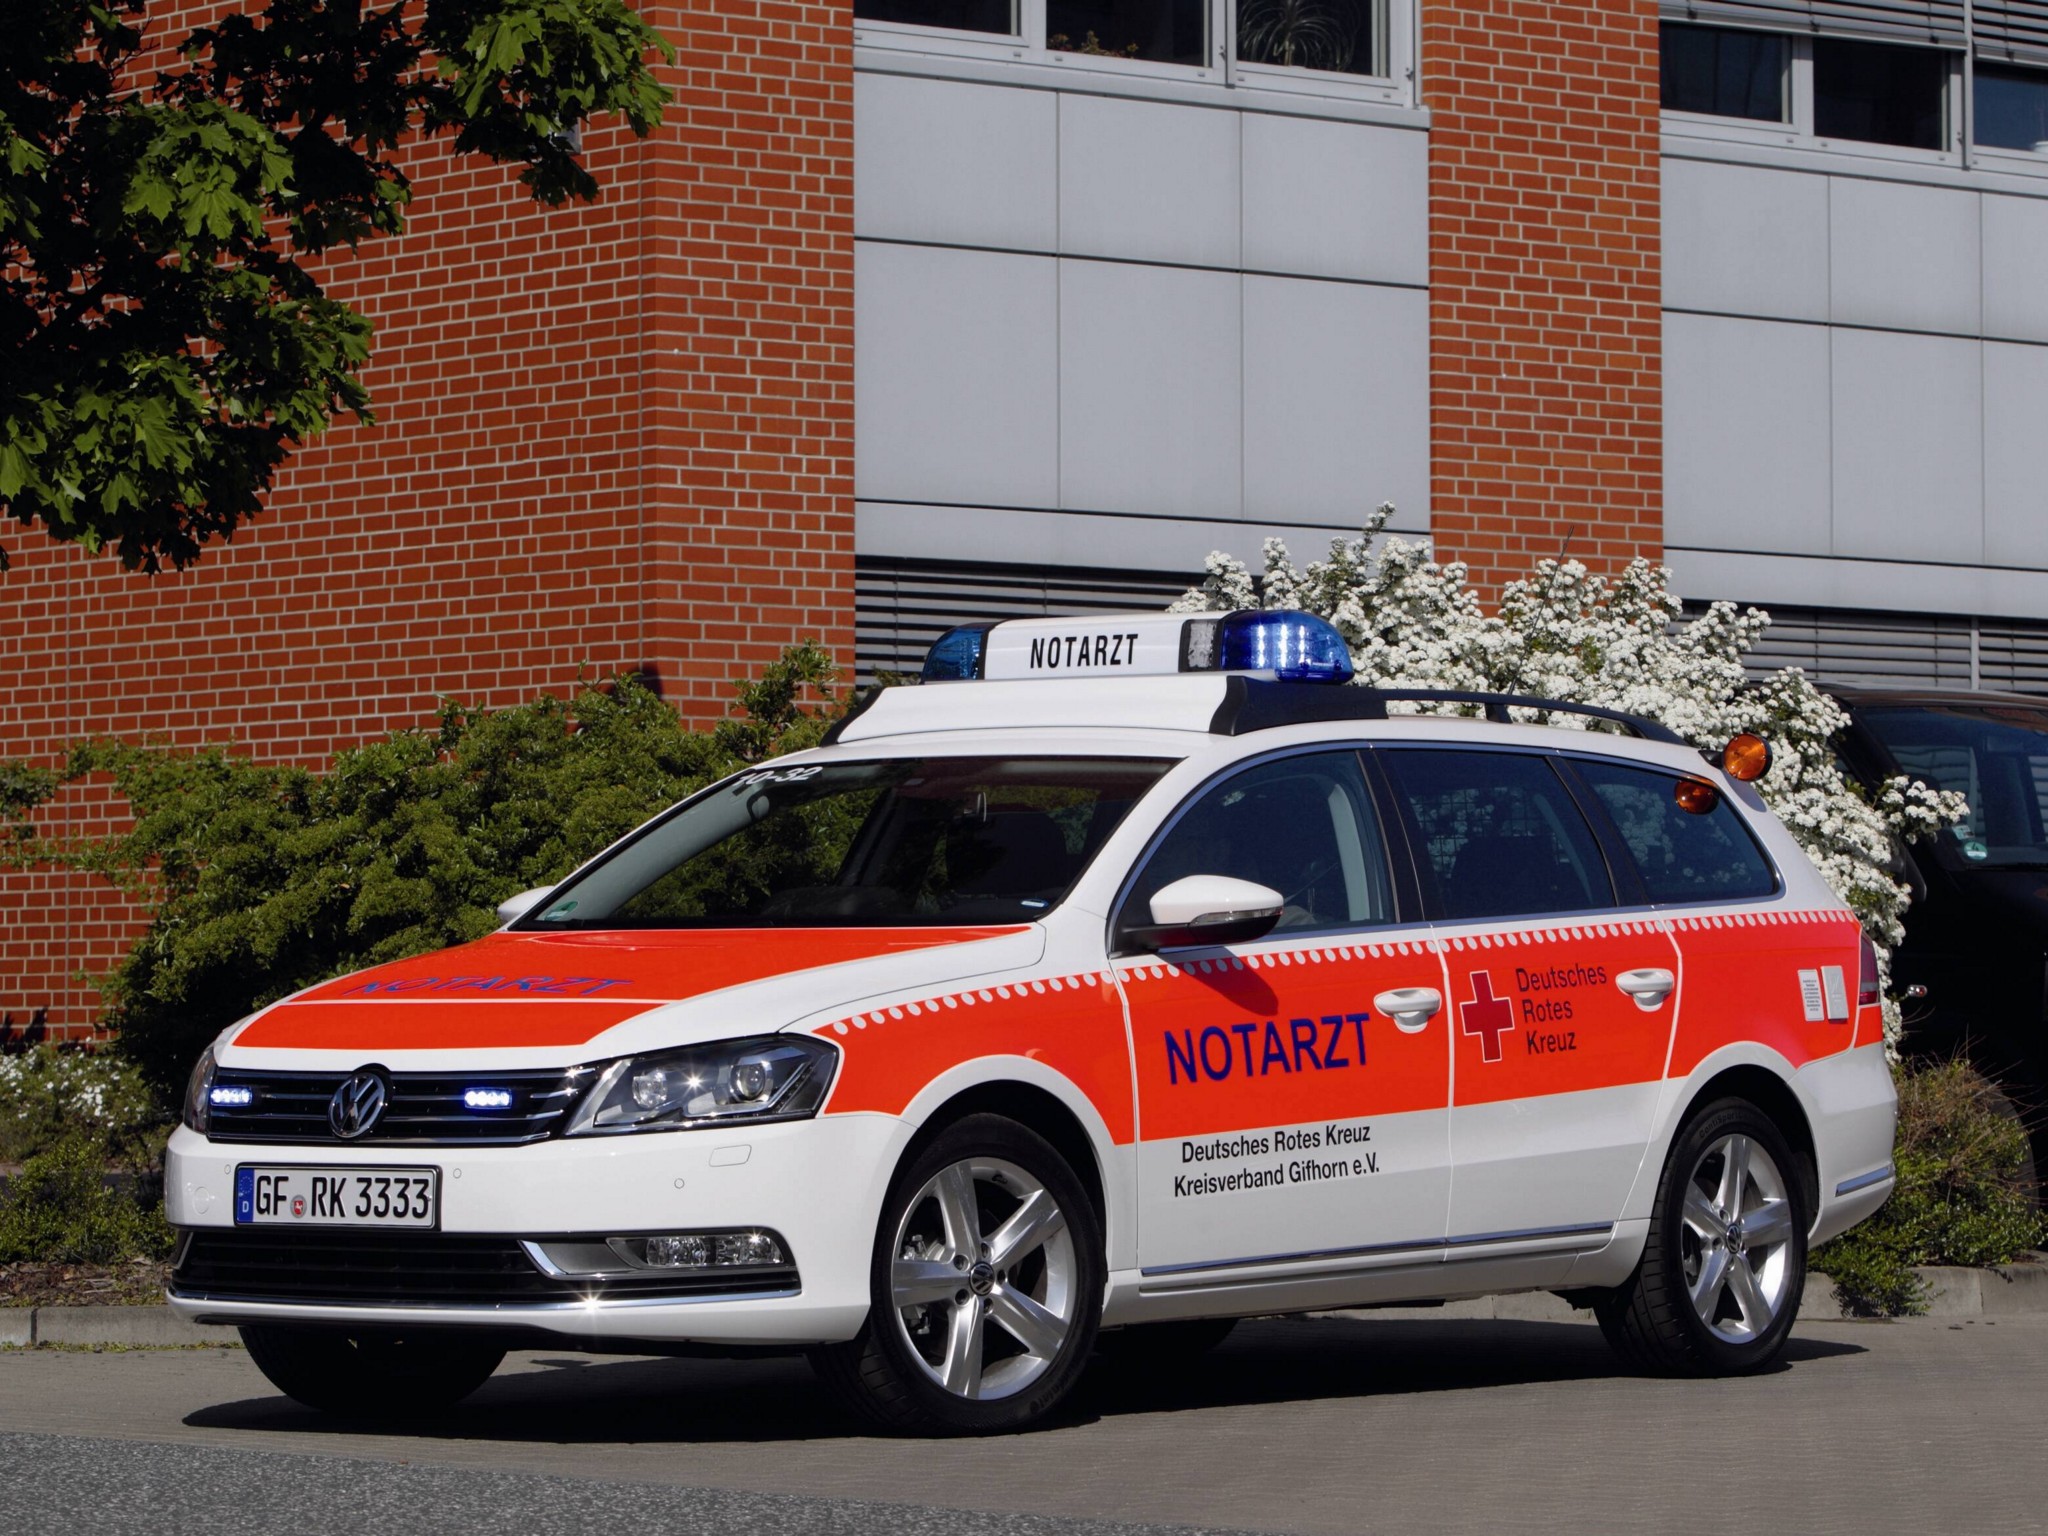 2011, Volkswagen, Passat, Variant, Notarzt, B7, Ambulance, Emergency, Stationwagon Wallpaper